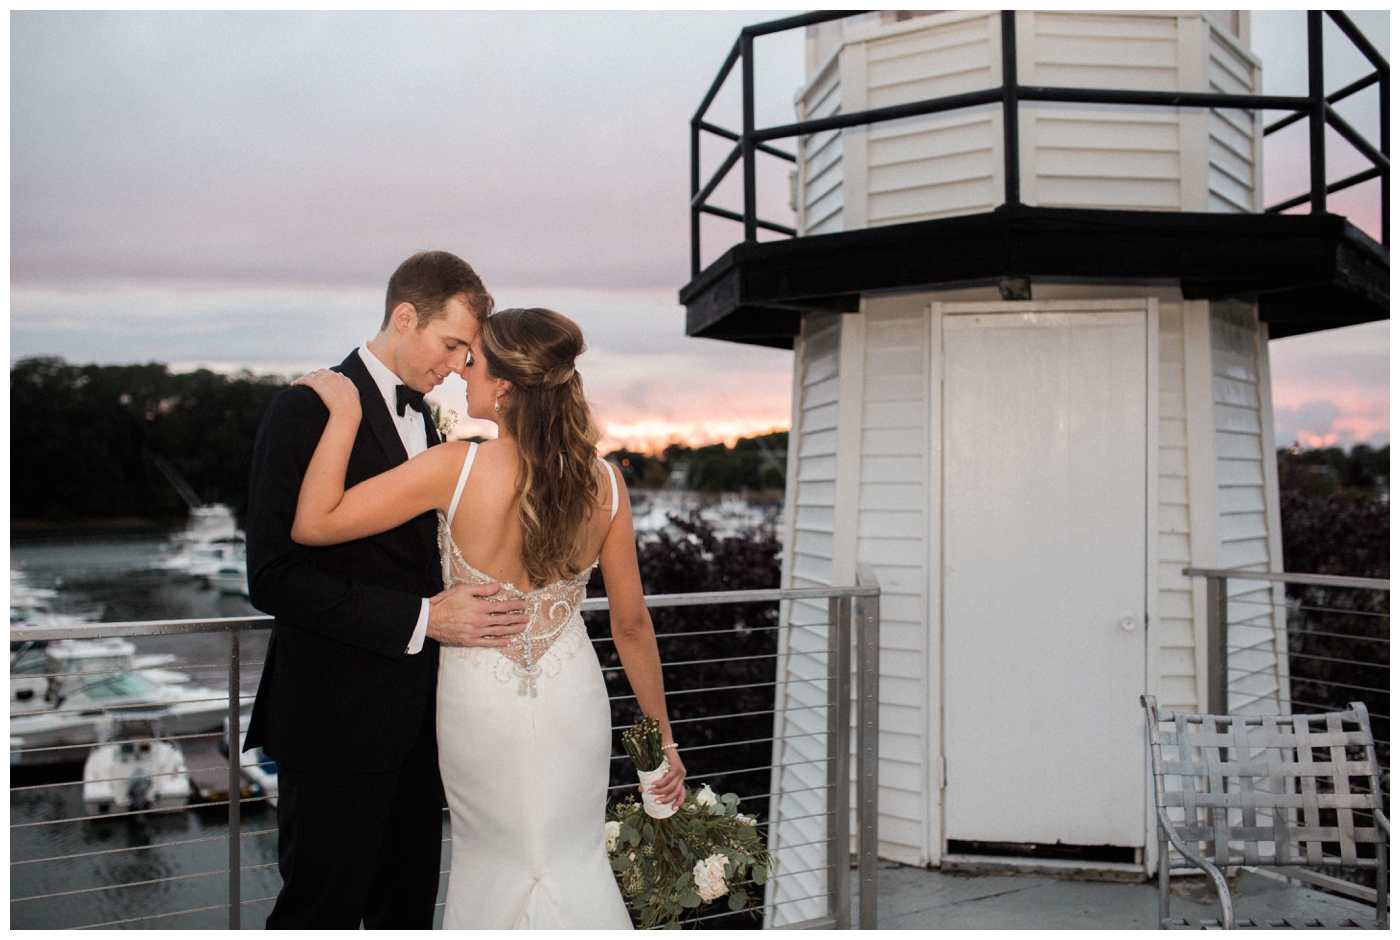 Danversport Yacht Club Wedding | Boston Wedding Photographer_0141.jpg